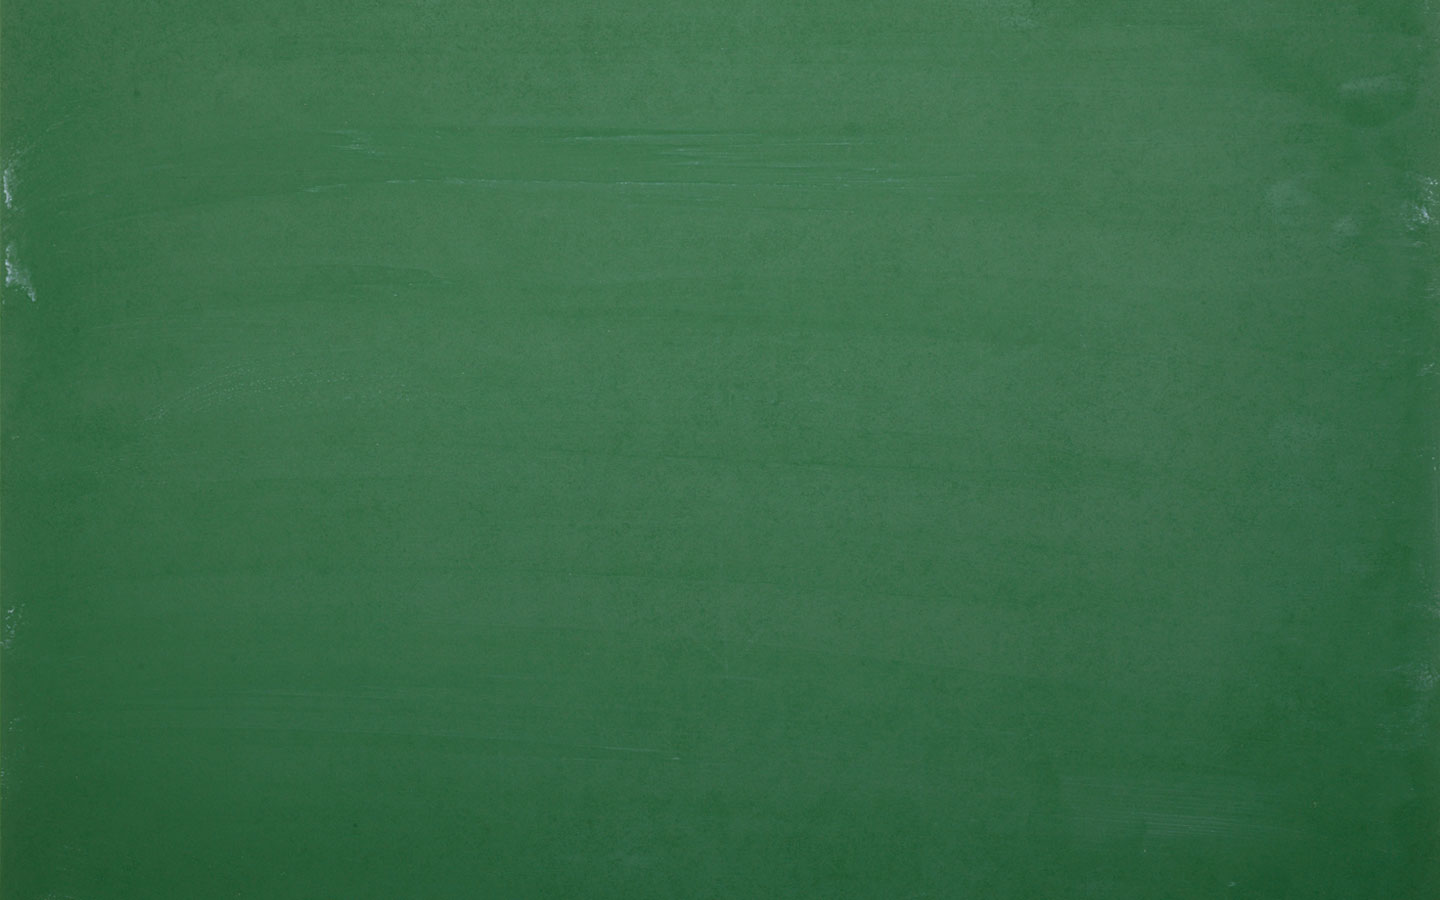 flat green chalkboard image